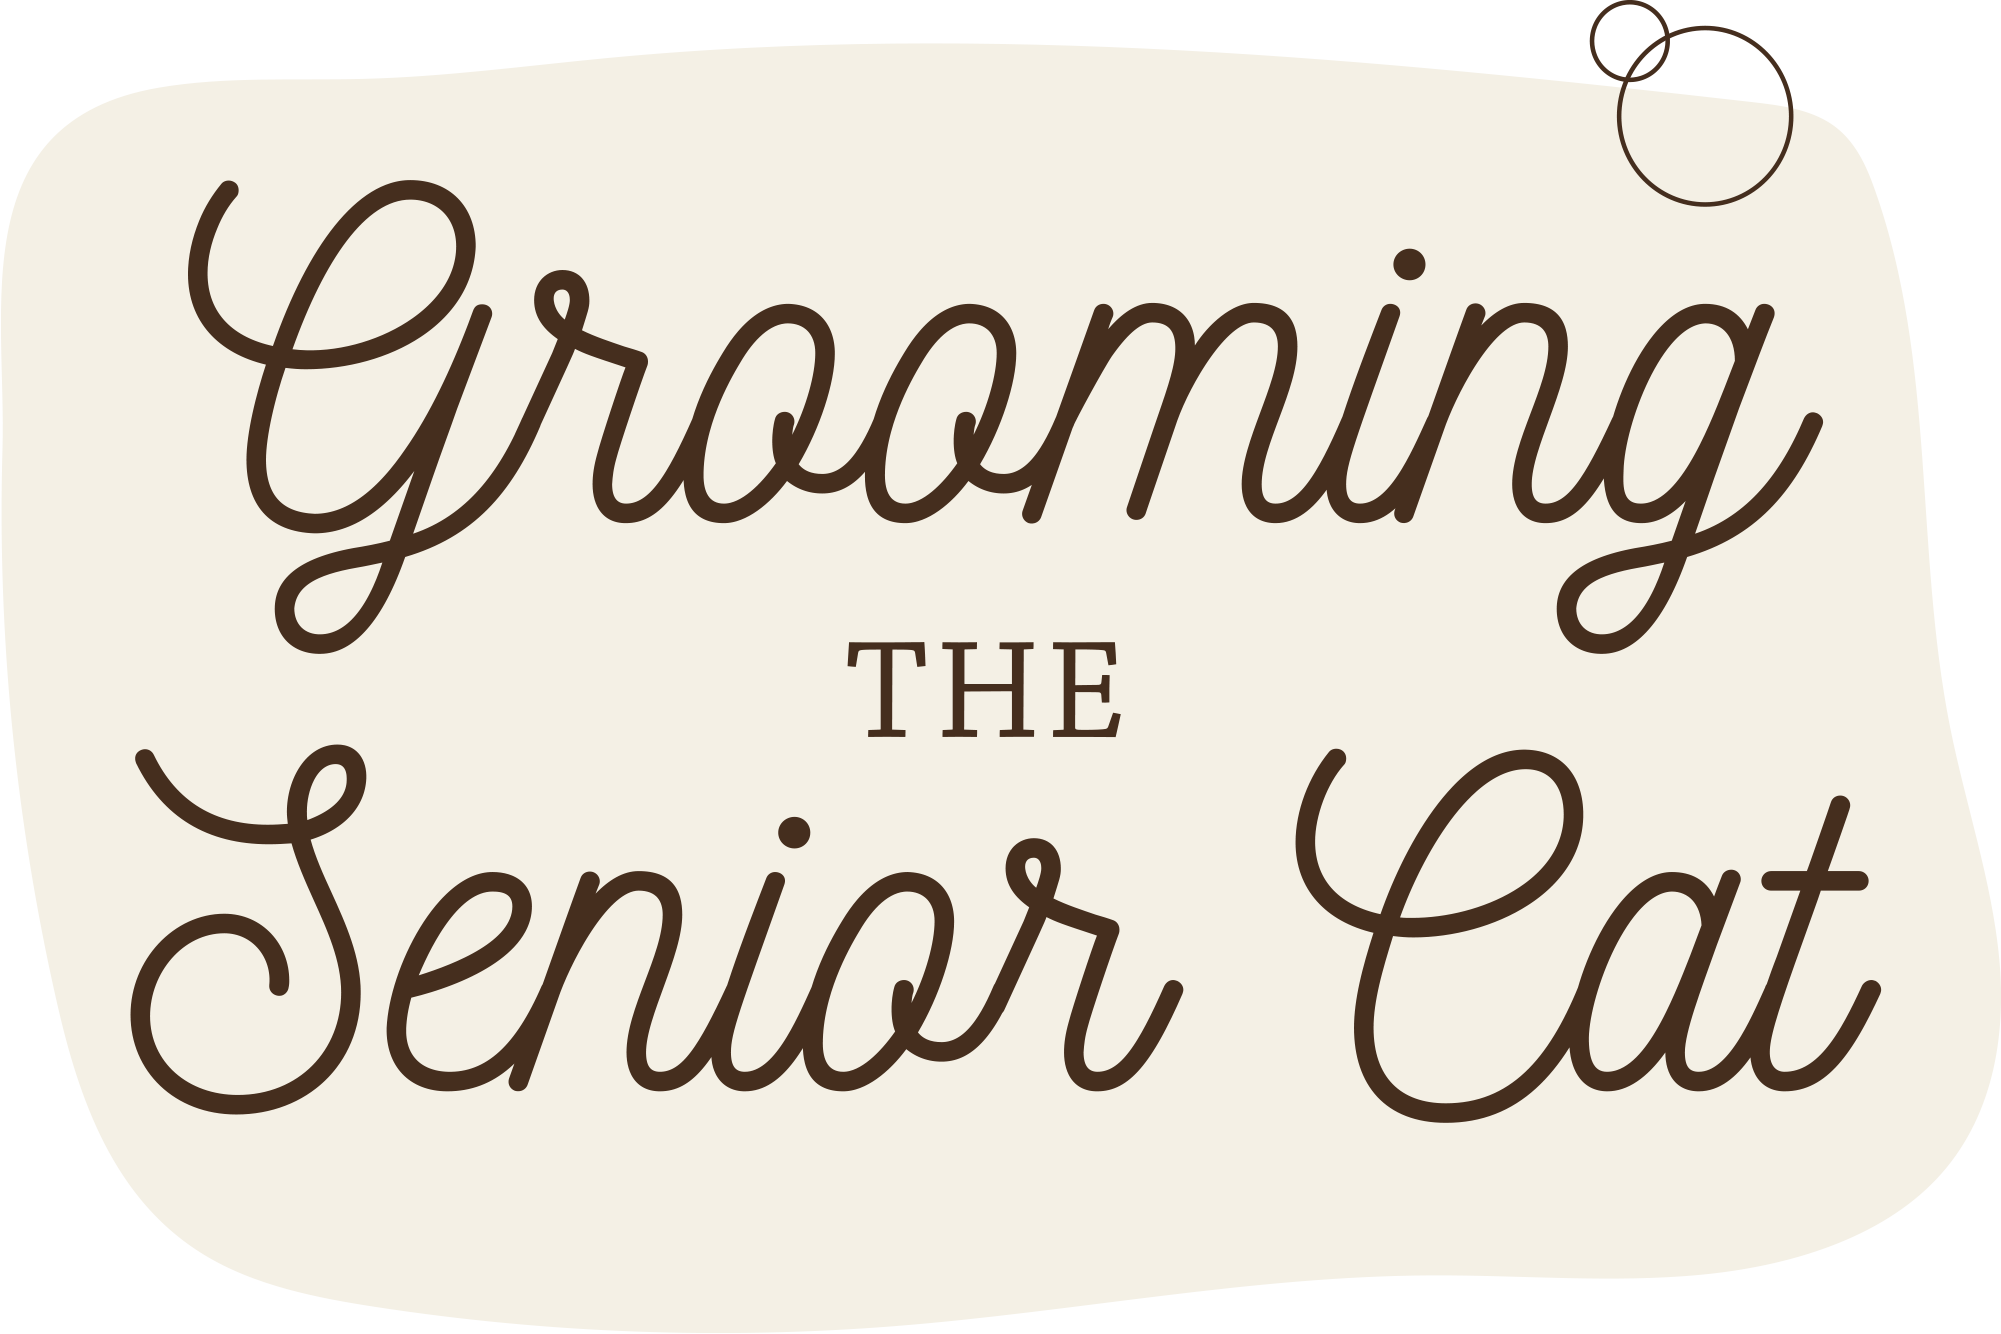 Grooming the Senior Cat